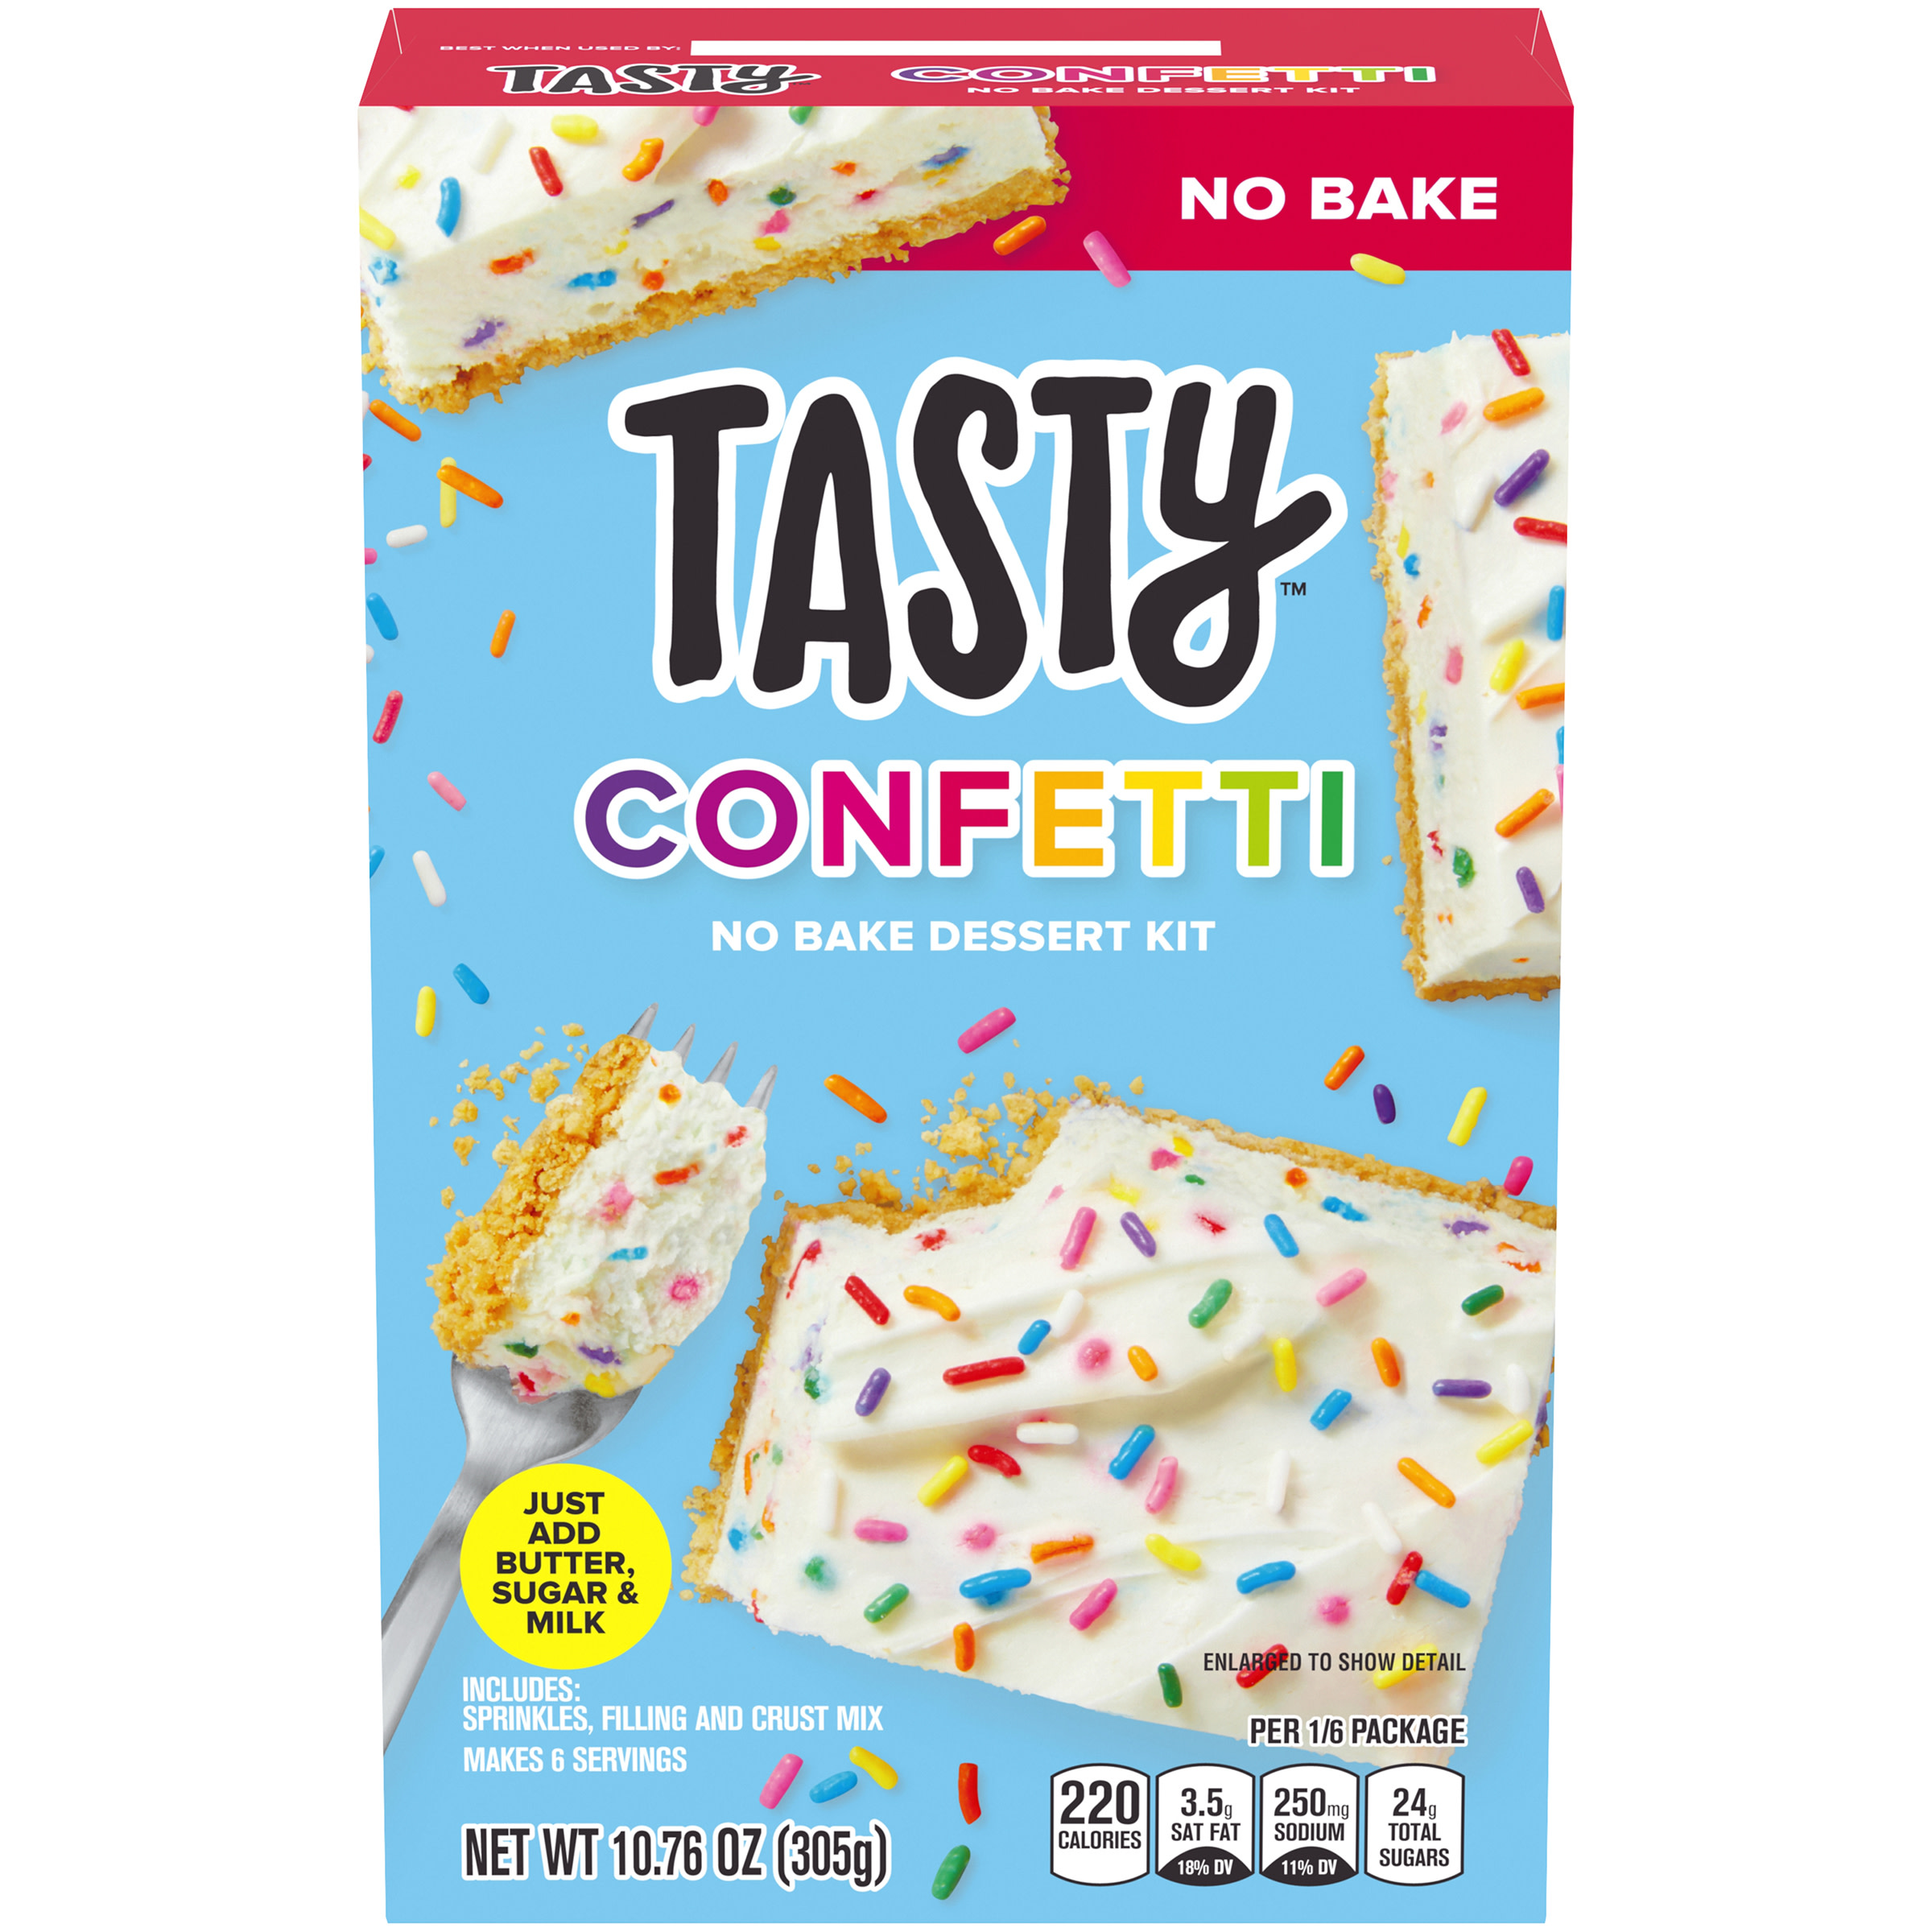 Tasty No Bake Confetti Dessert Kit with Sprinkles, Filling & Crust Mix, 10.76 oz Box - image 1 of 8